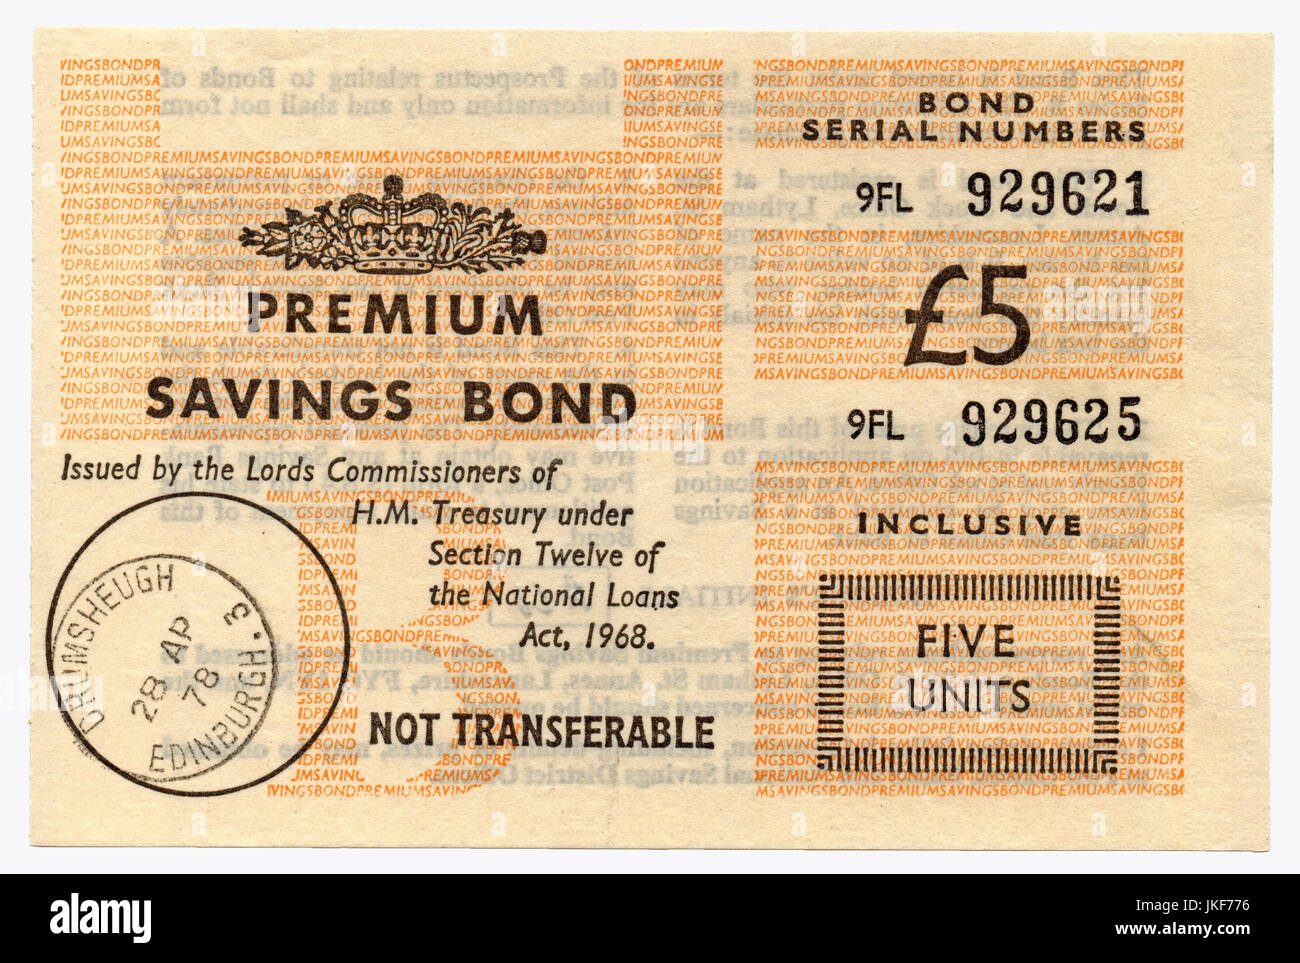 £5 Premium Savings Bond bought in 1978. Stock Photo